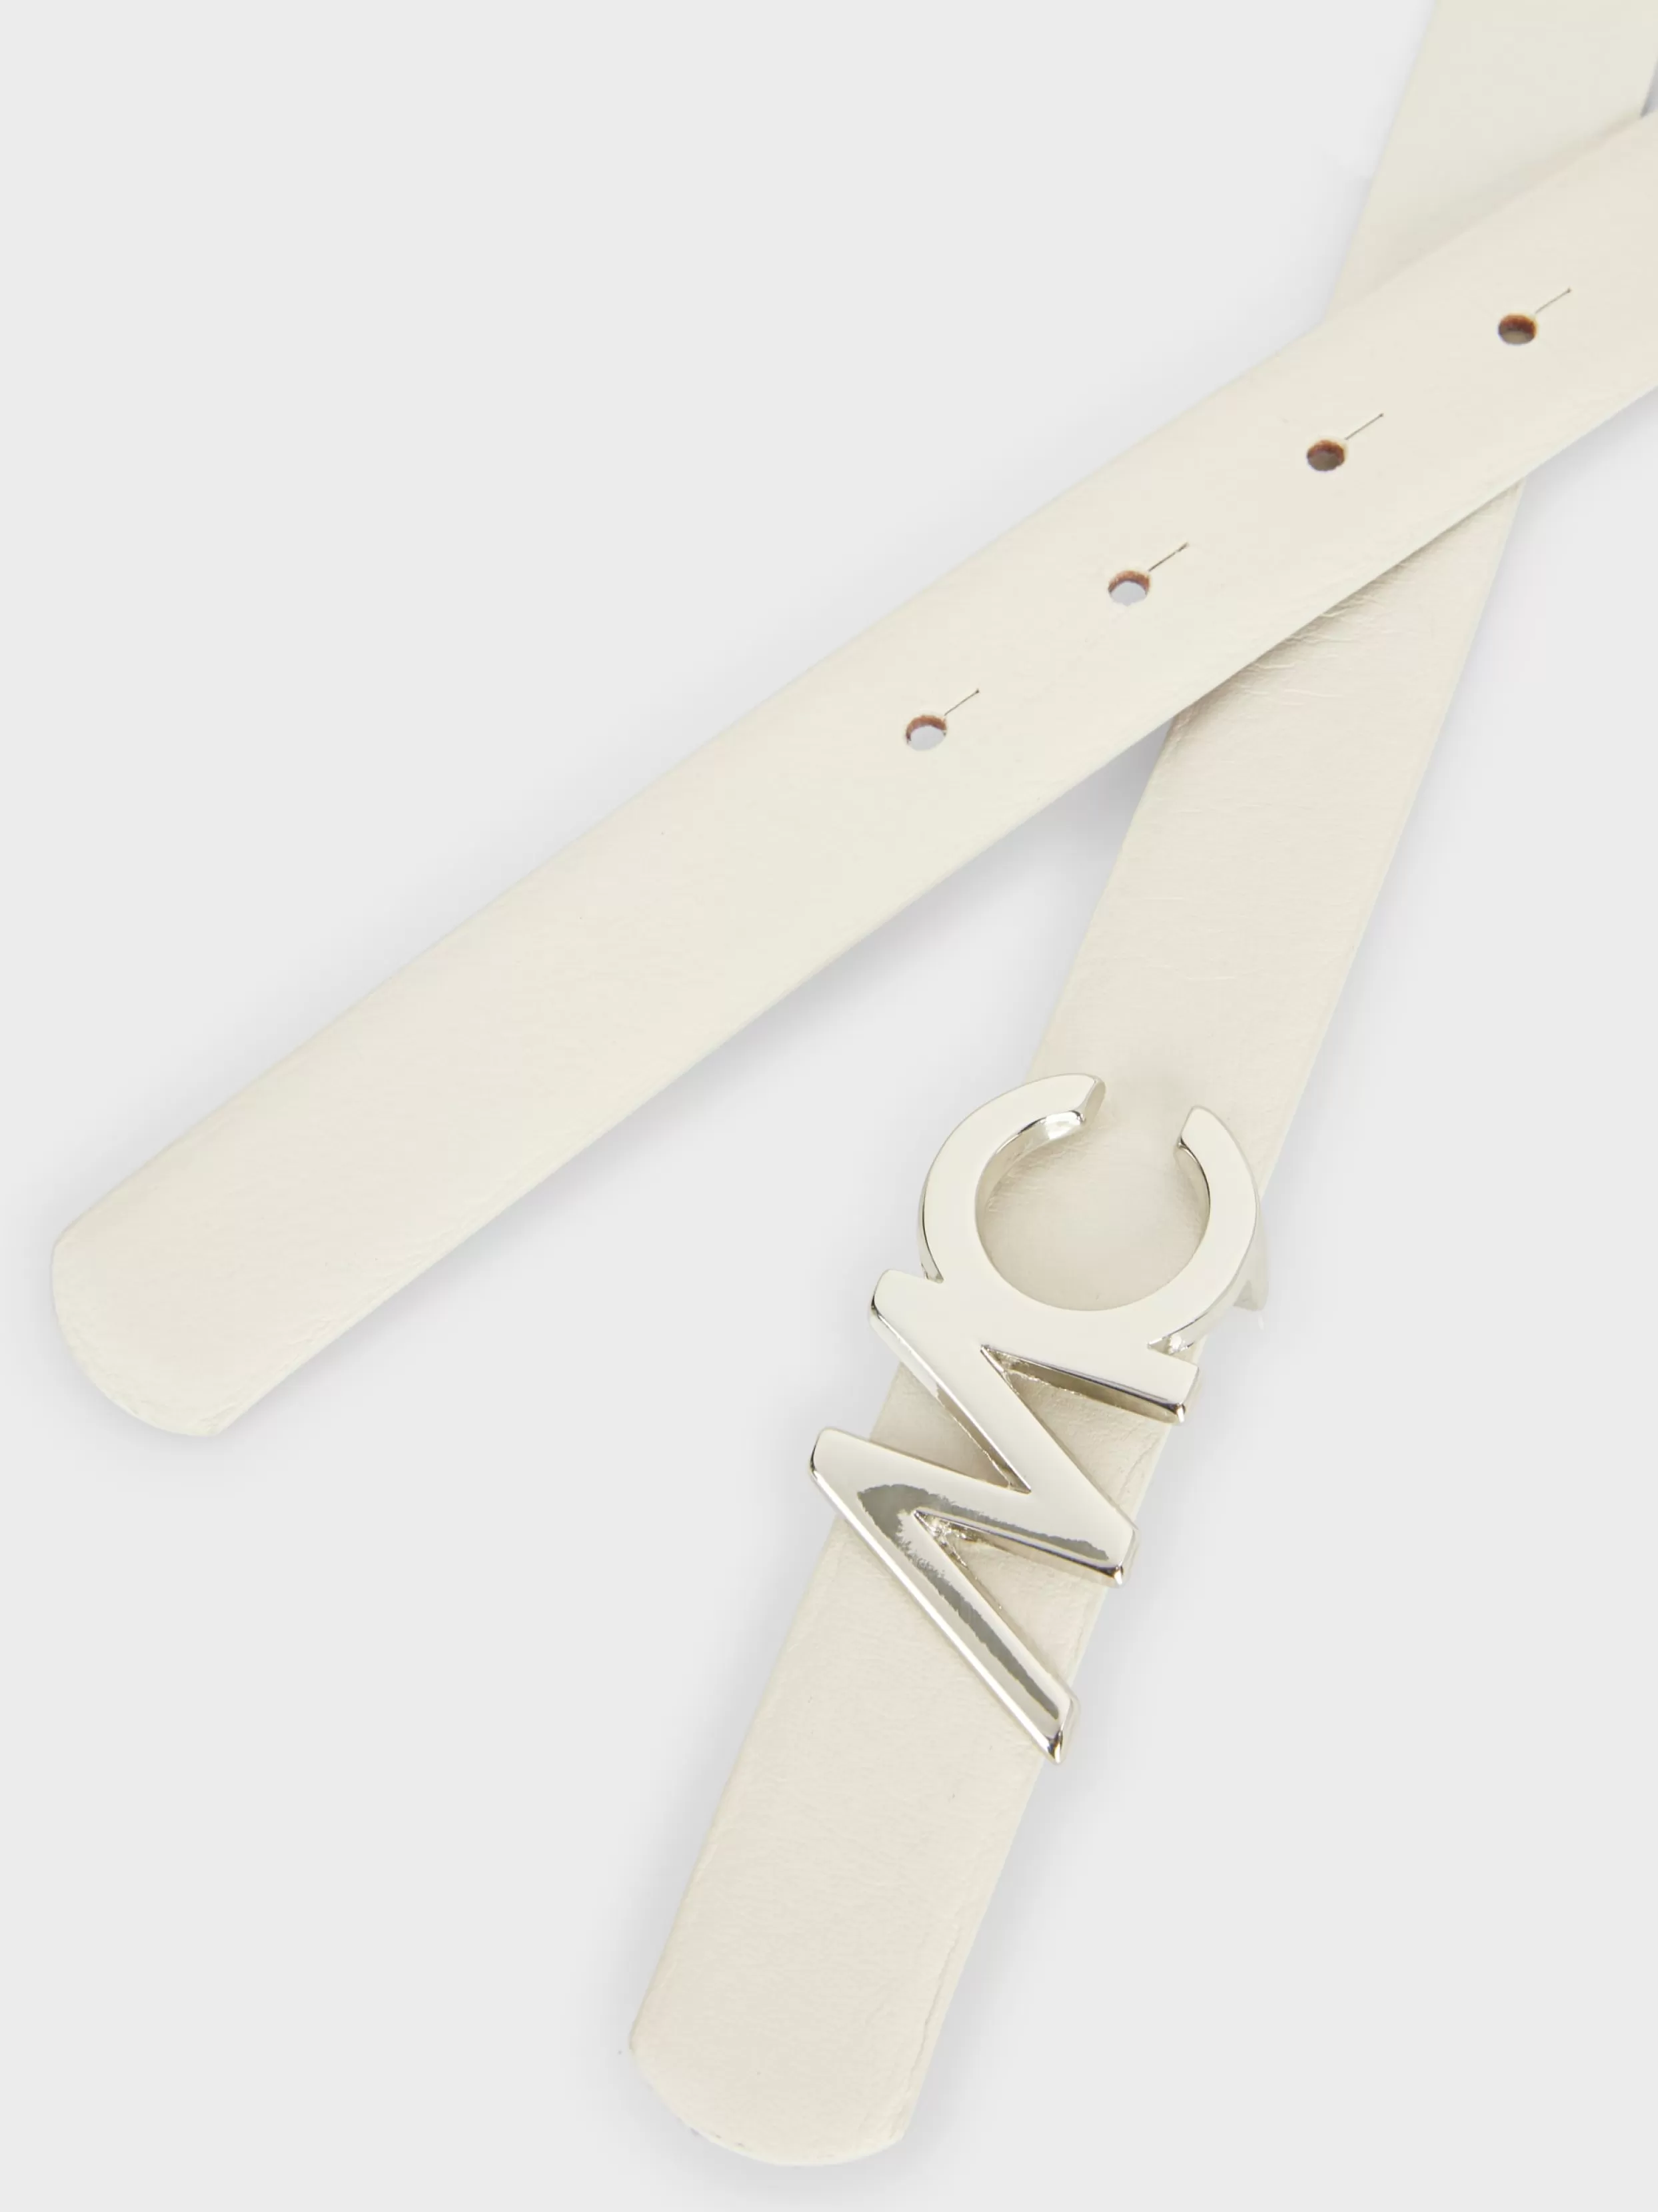 Marc Cain Leather belt with MC logo buckle | Accessoires